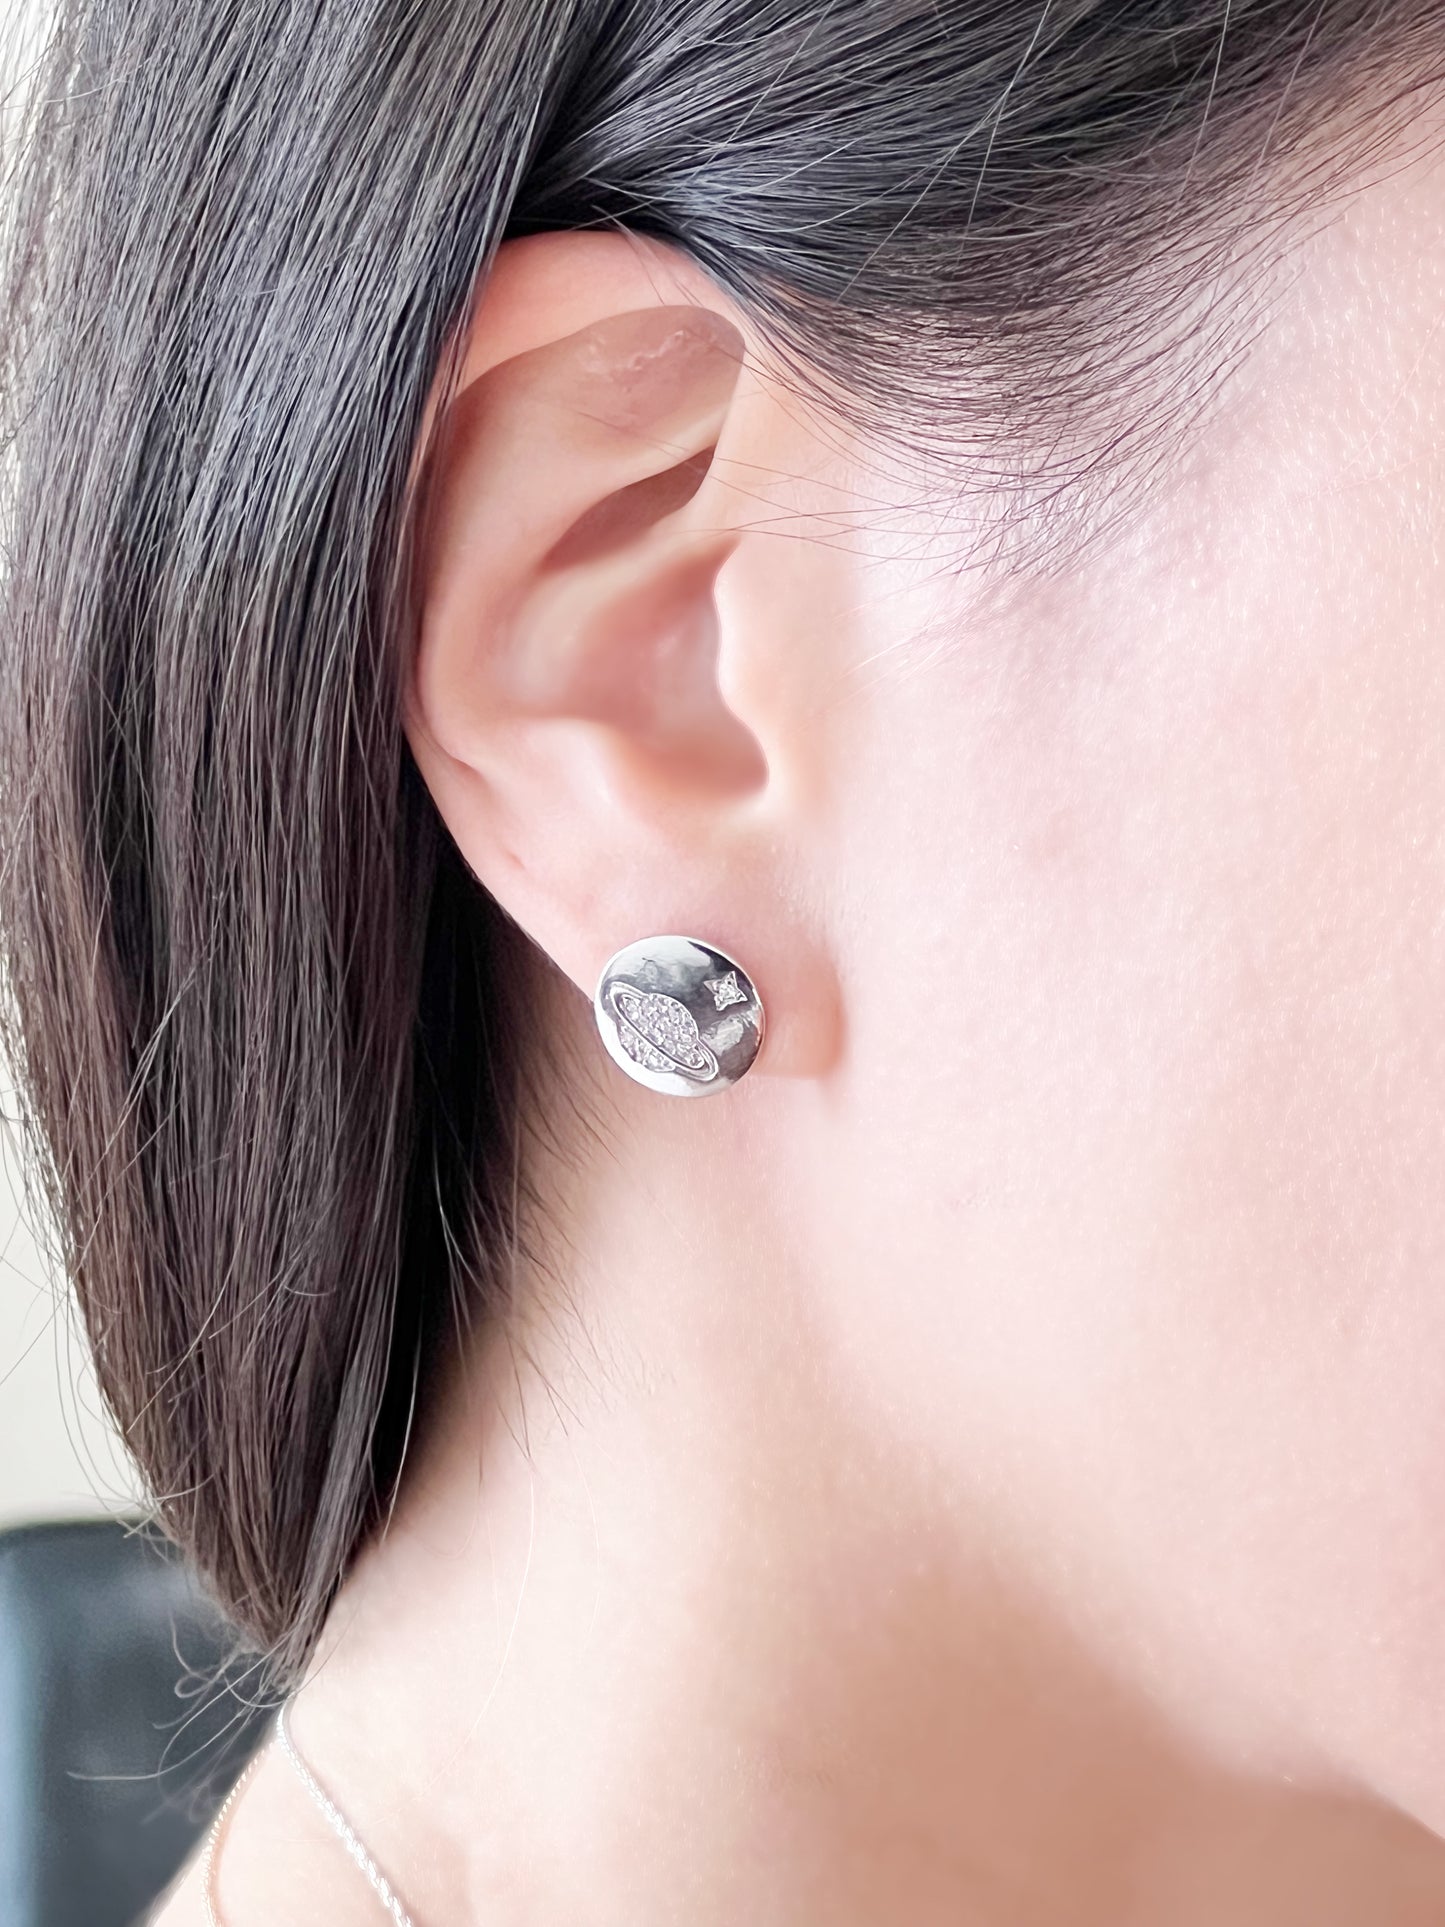 Cubic Universe Planet Earrings , cubic Space disc earrings, Saturn and moon cubic earrings